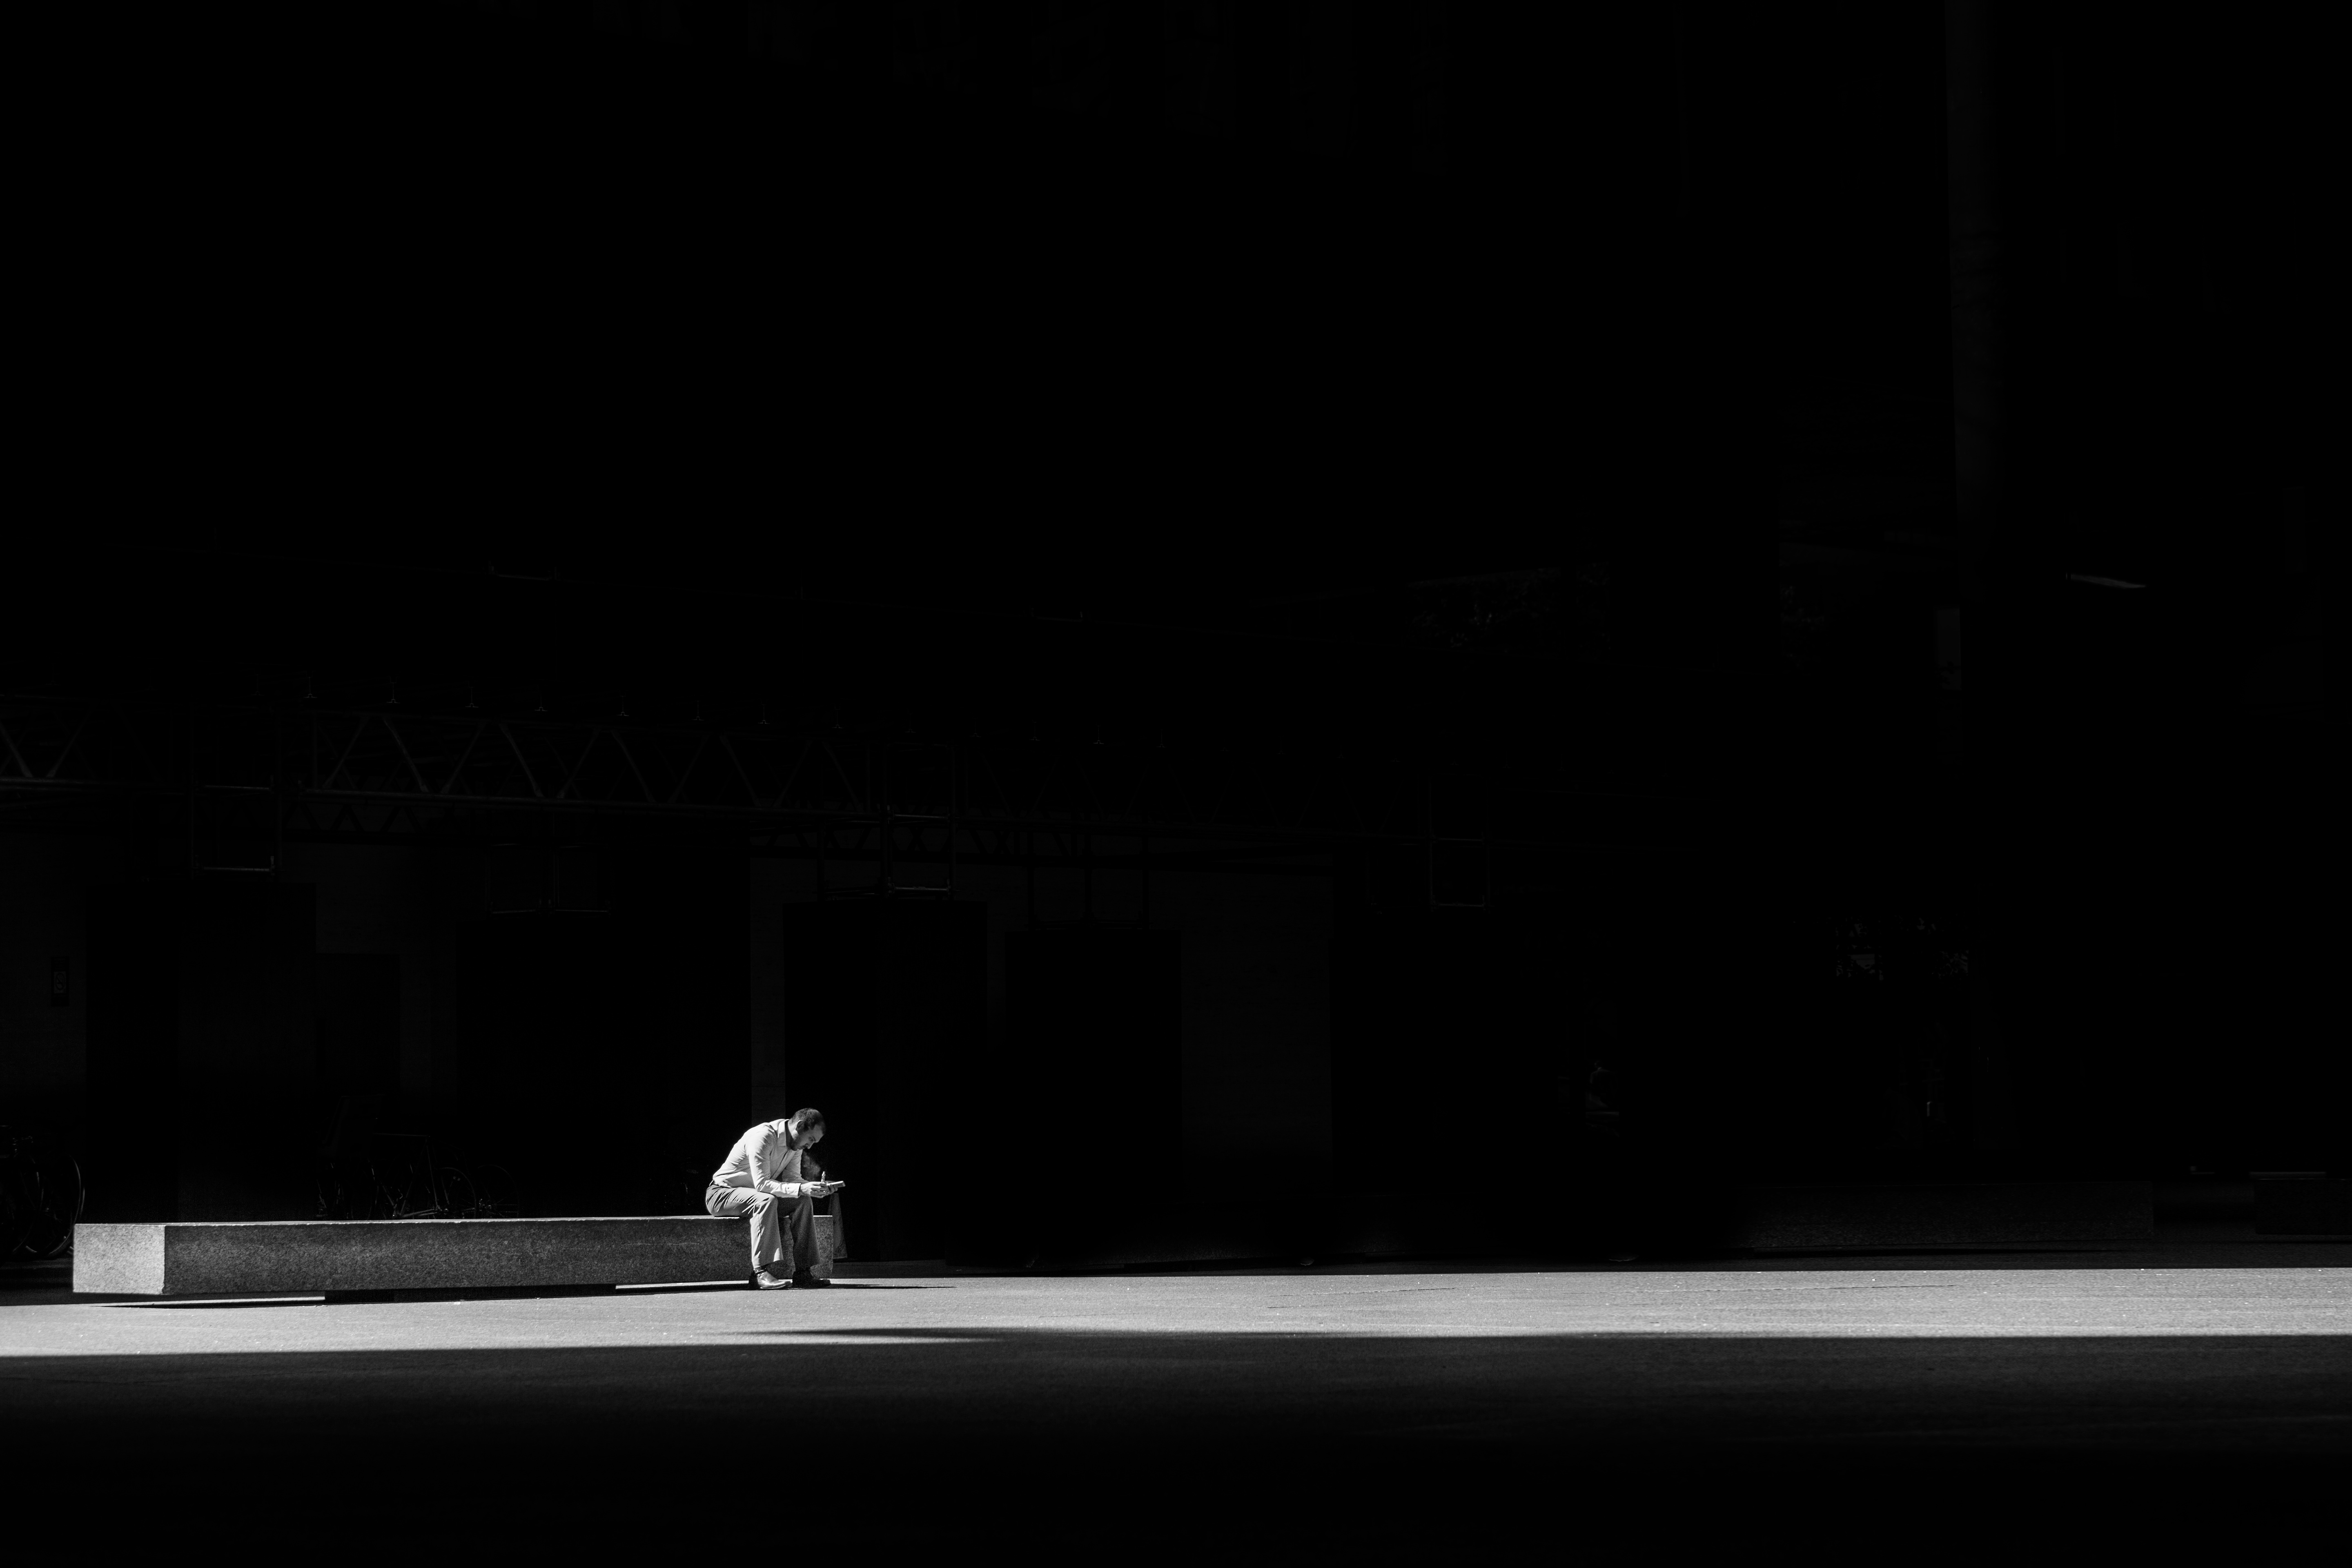 Man sitting alone on bench in darkness